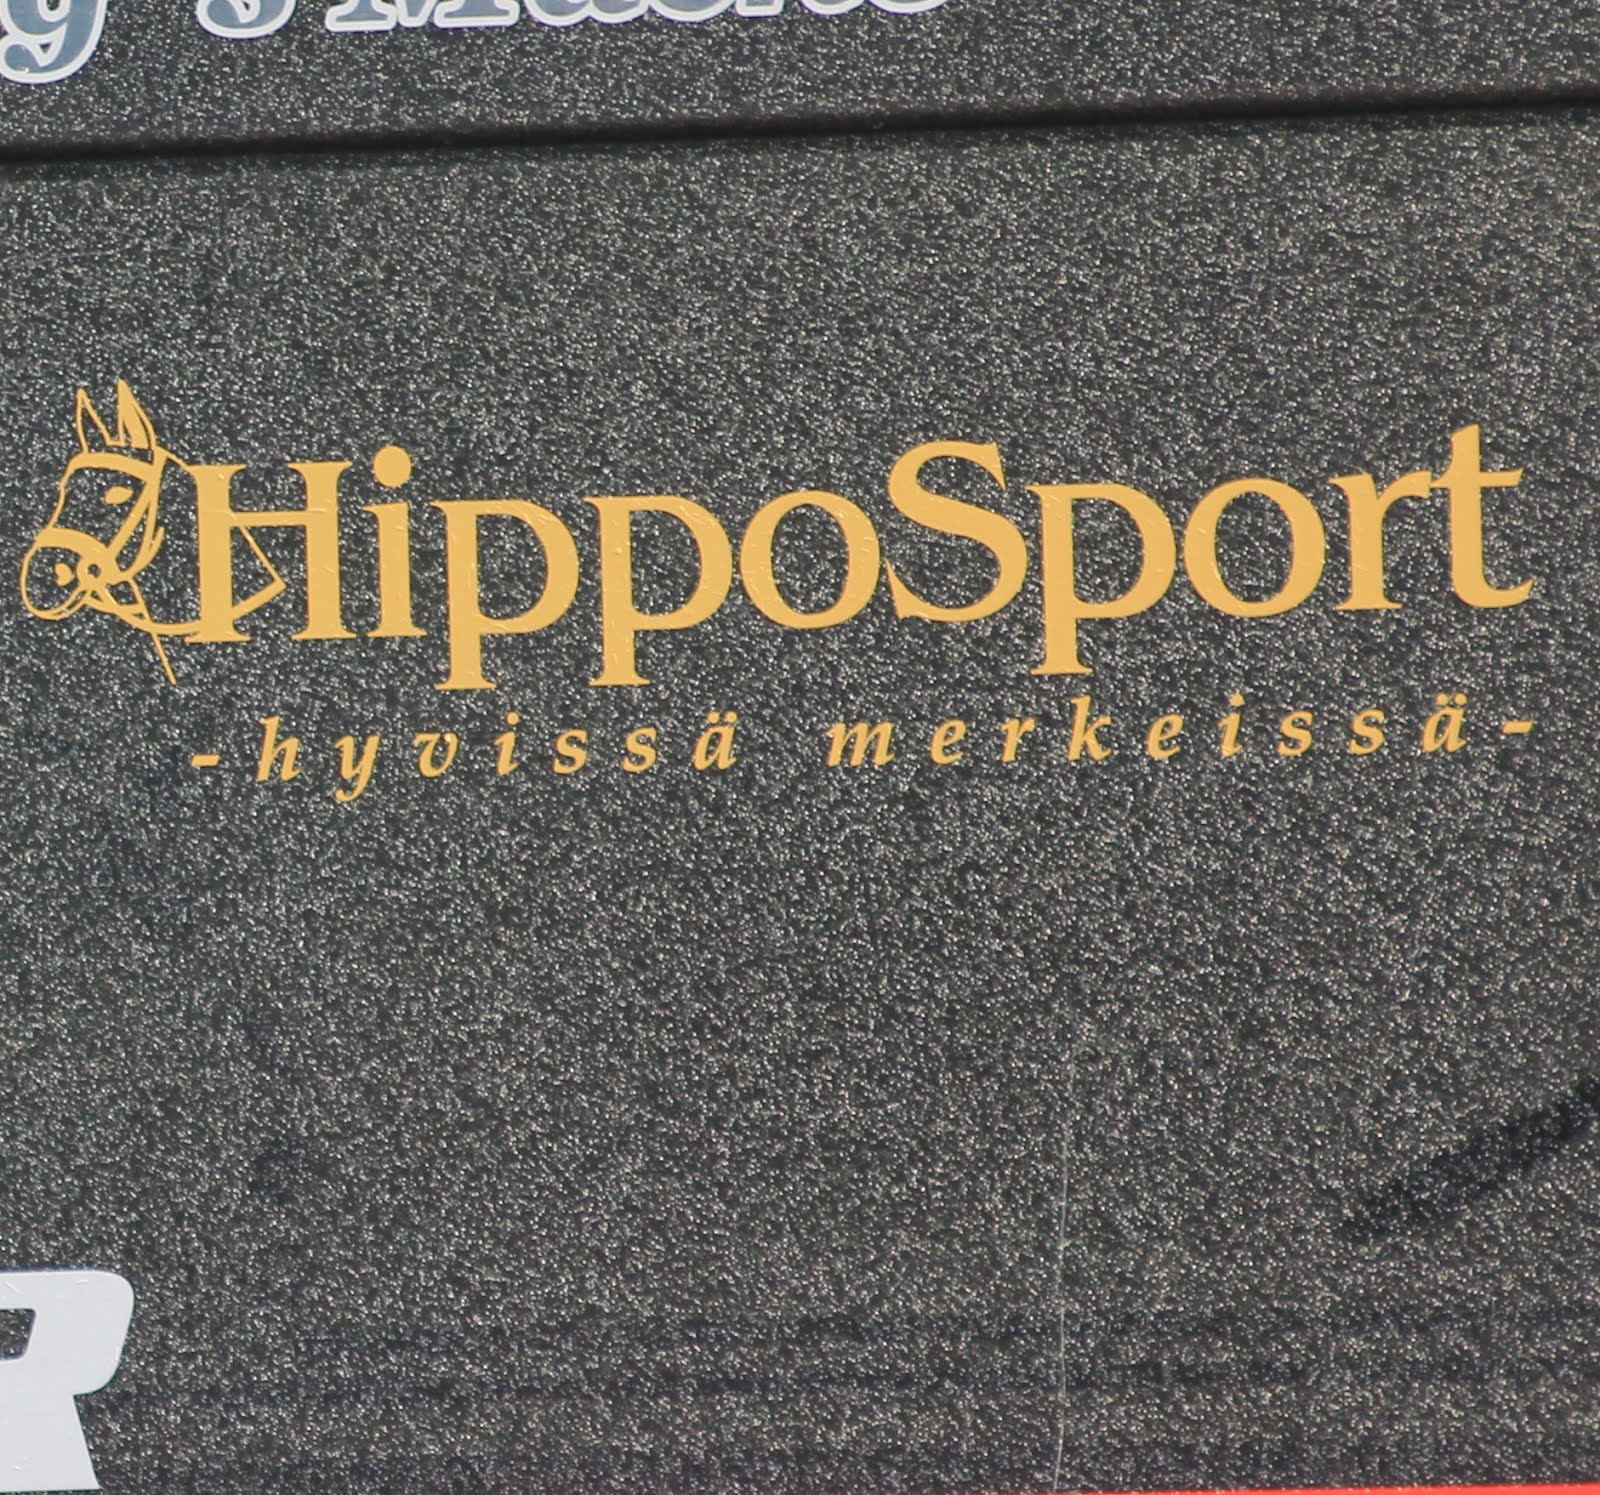 Sponsored by HippoSport